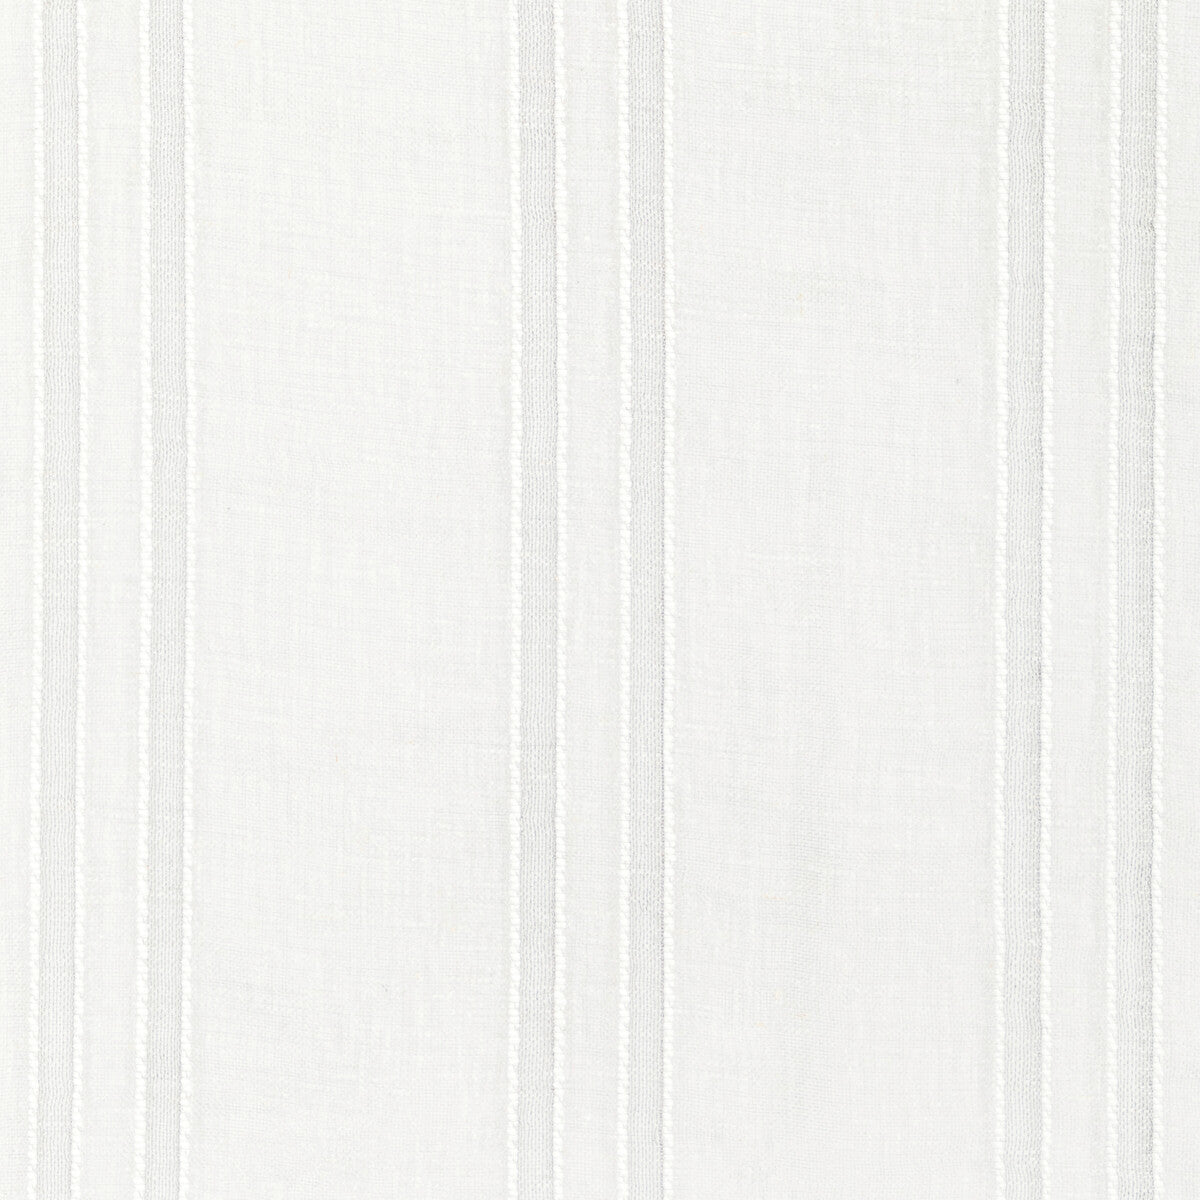 Kravet Basics fabric in 4805-101 color - pattern 4805.101.0 - by Kravet Basics in the Gis collection